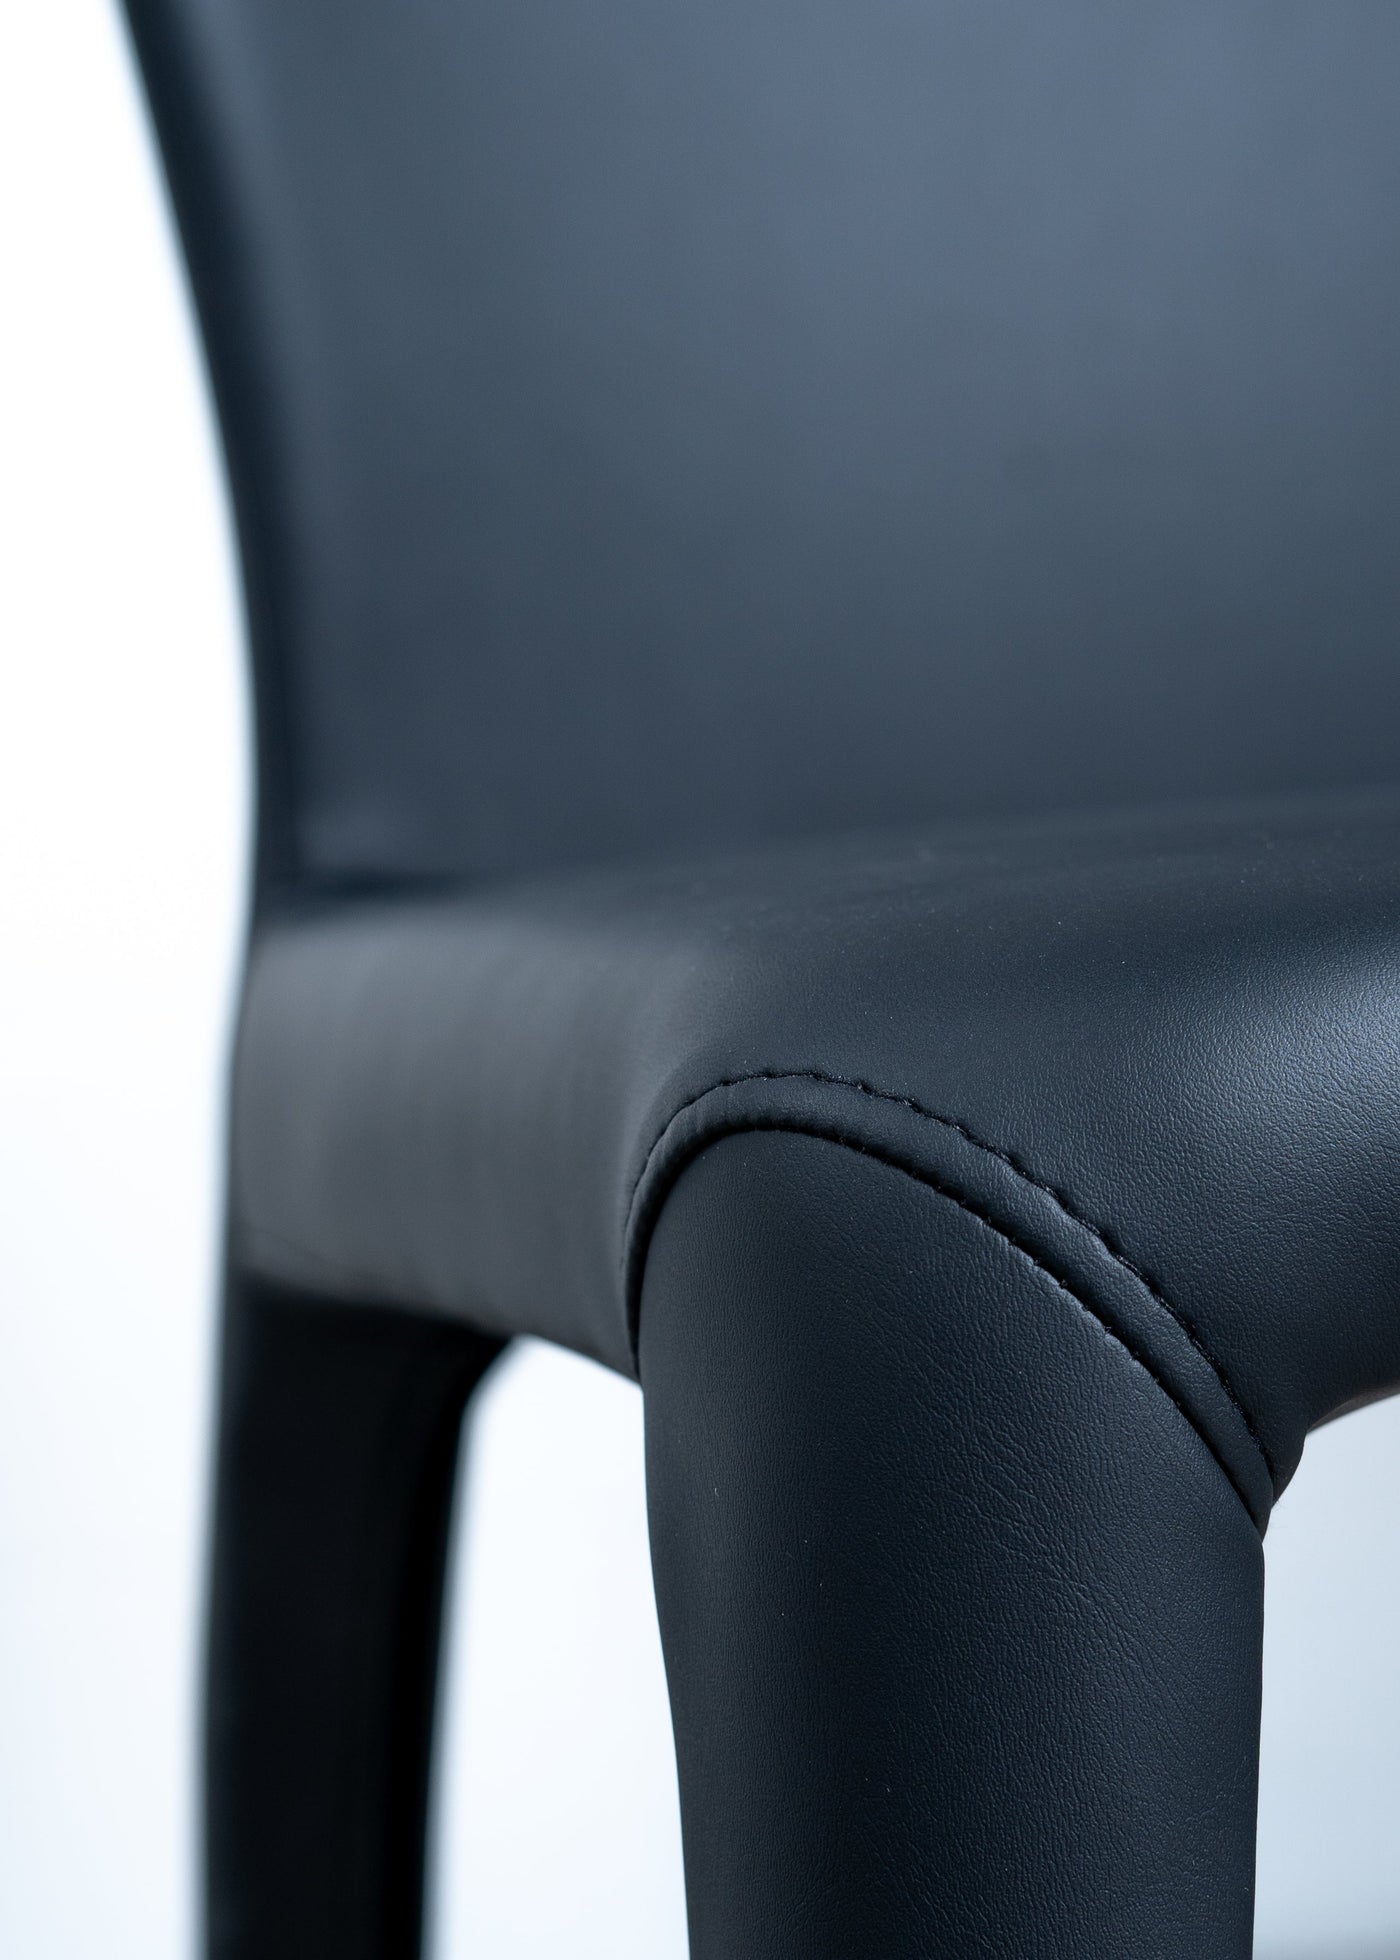 Hola armless dining Chair - Retro Modern Designs